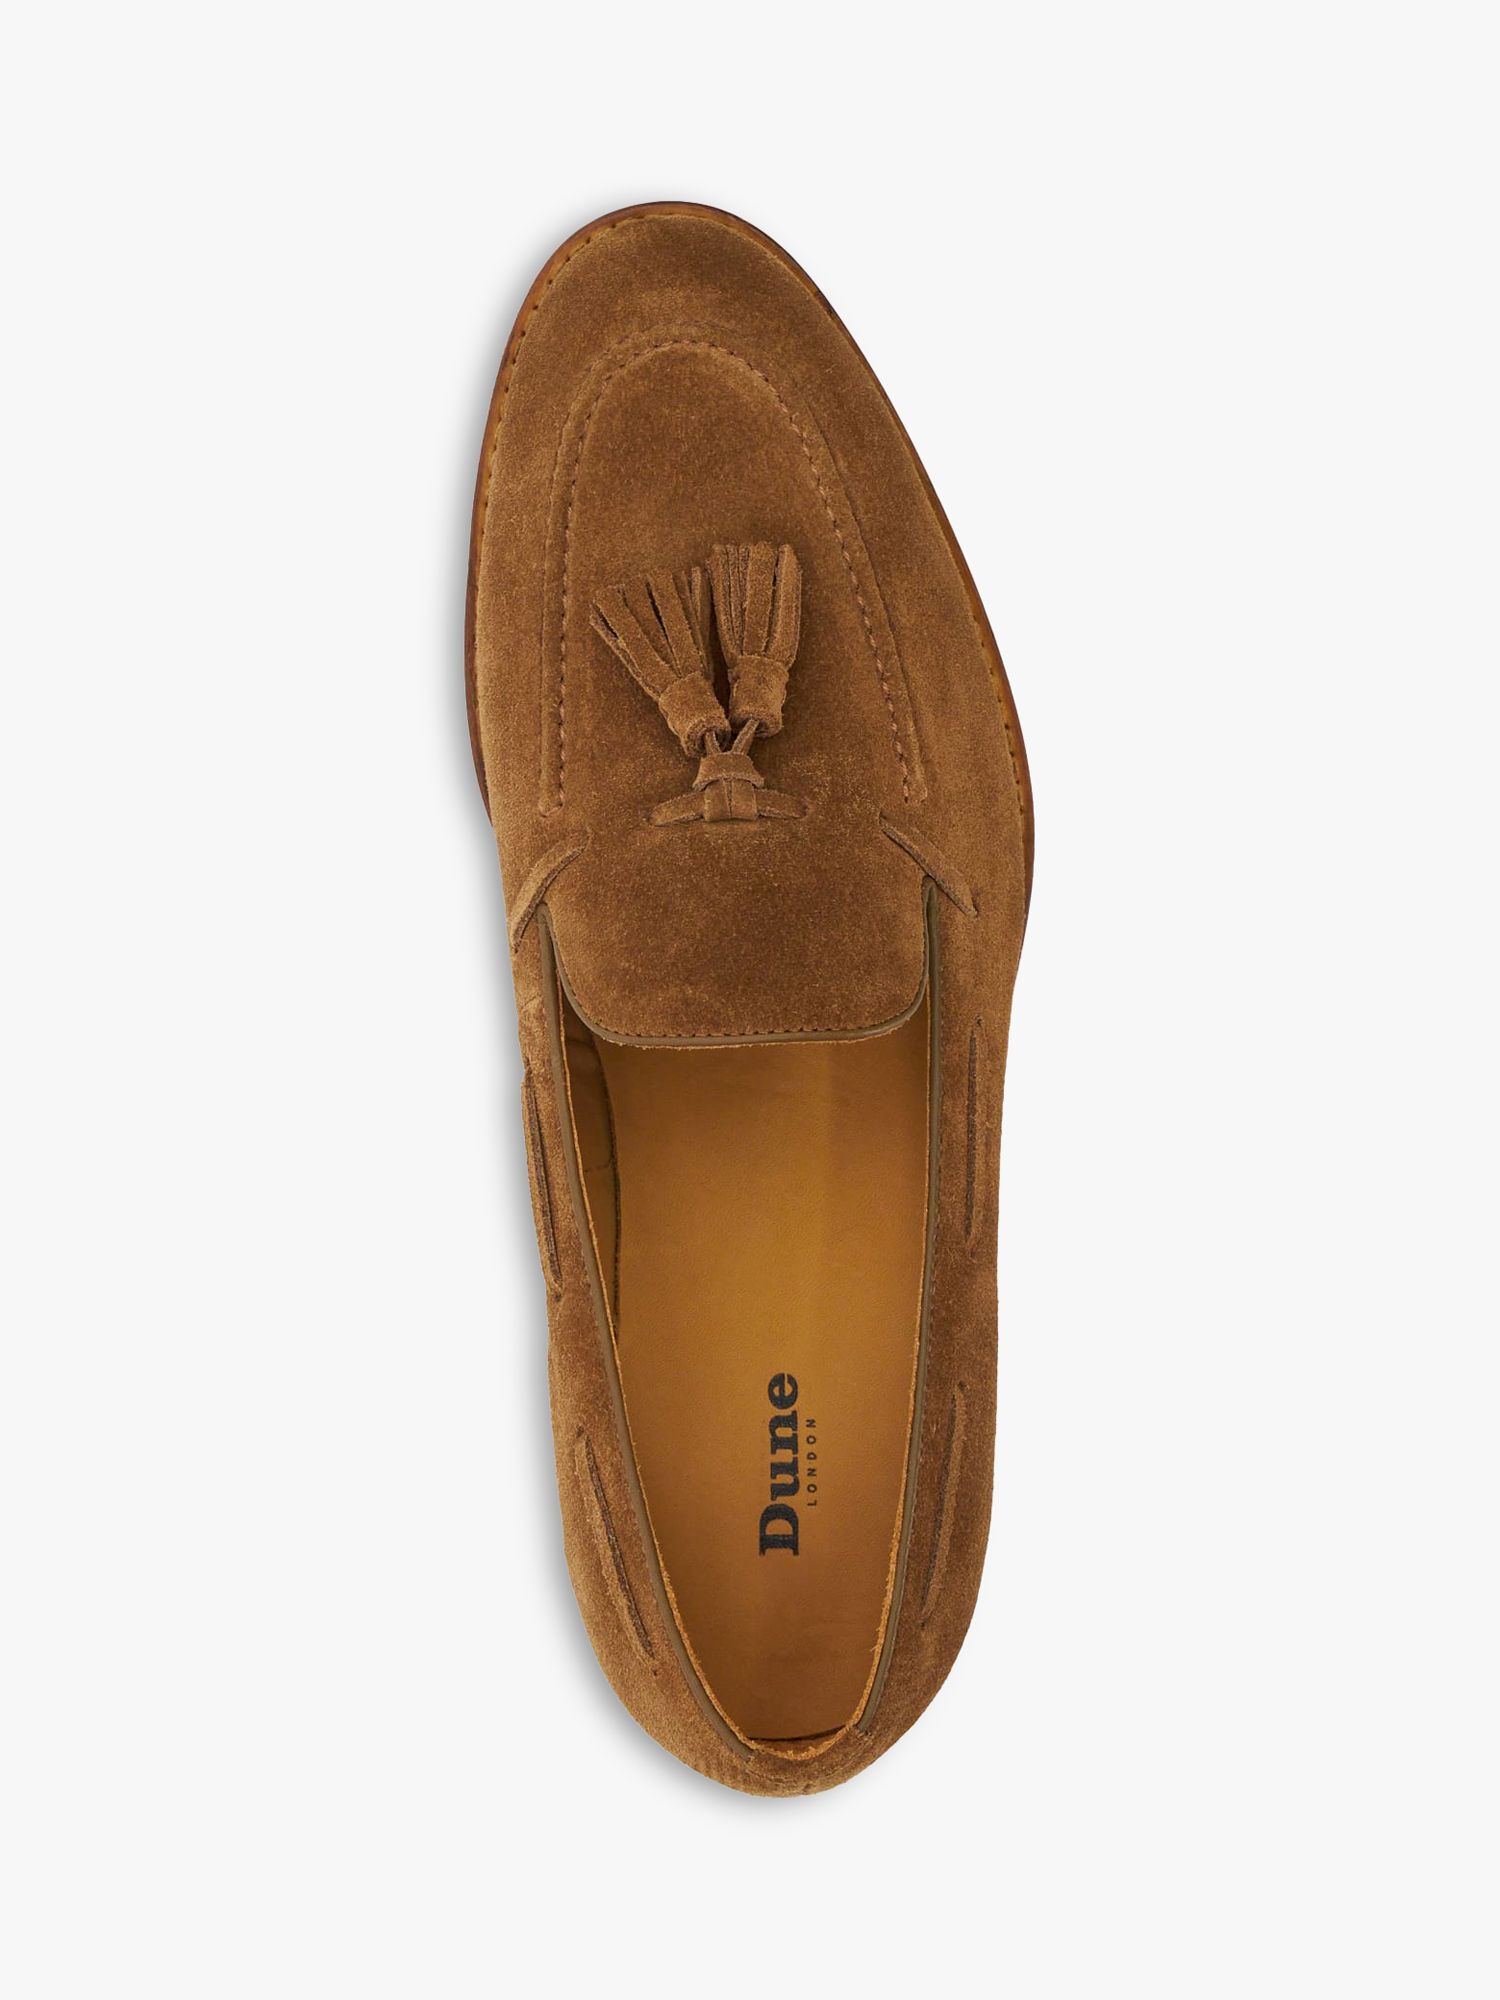 Dune Sandders Leather Tassel Loafers, Tan, 6